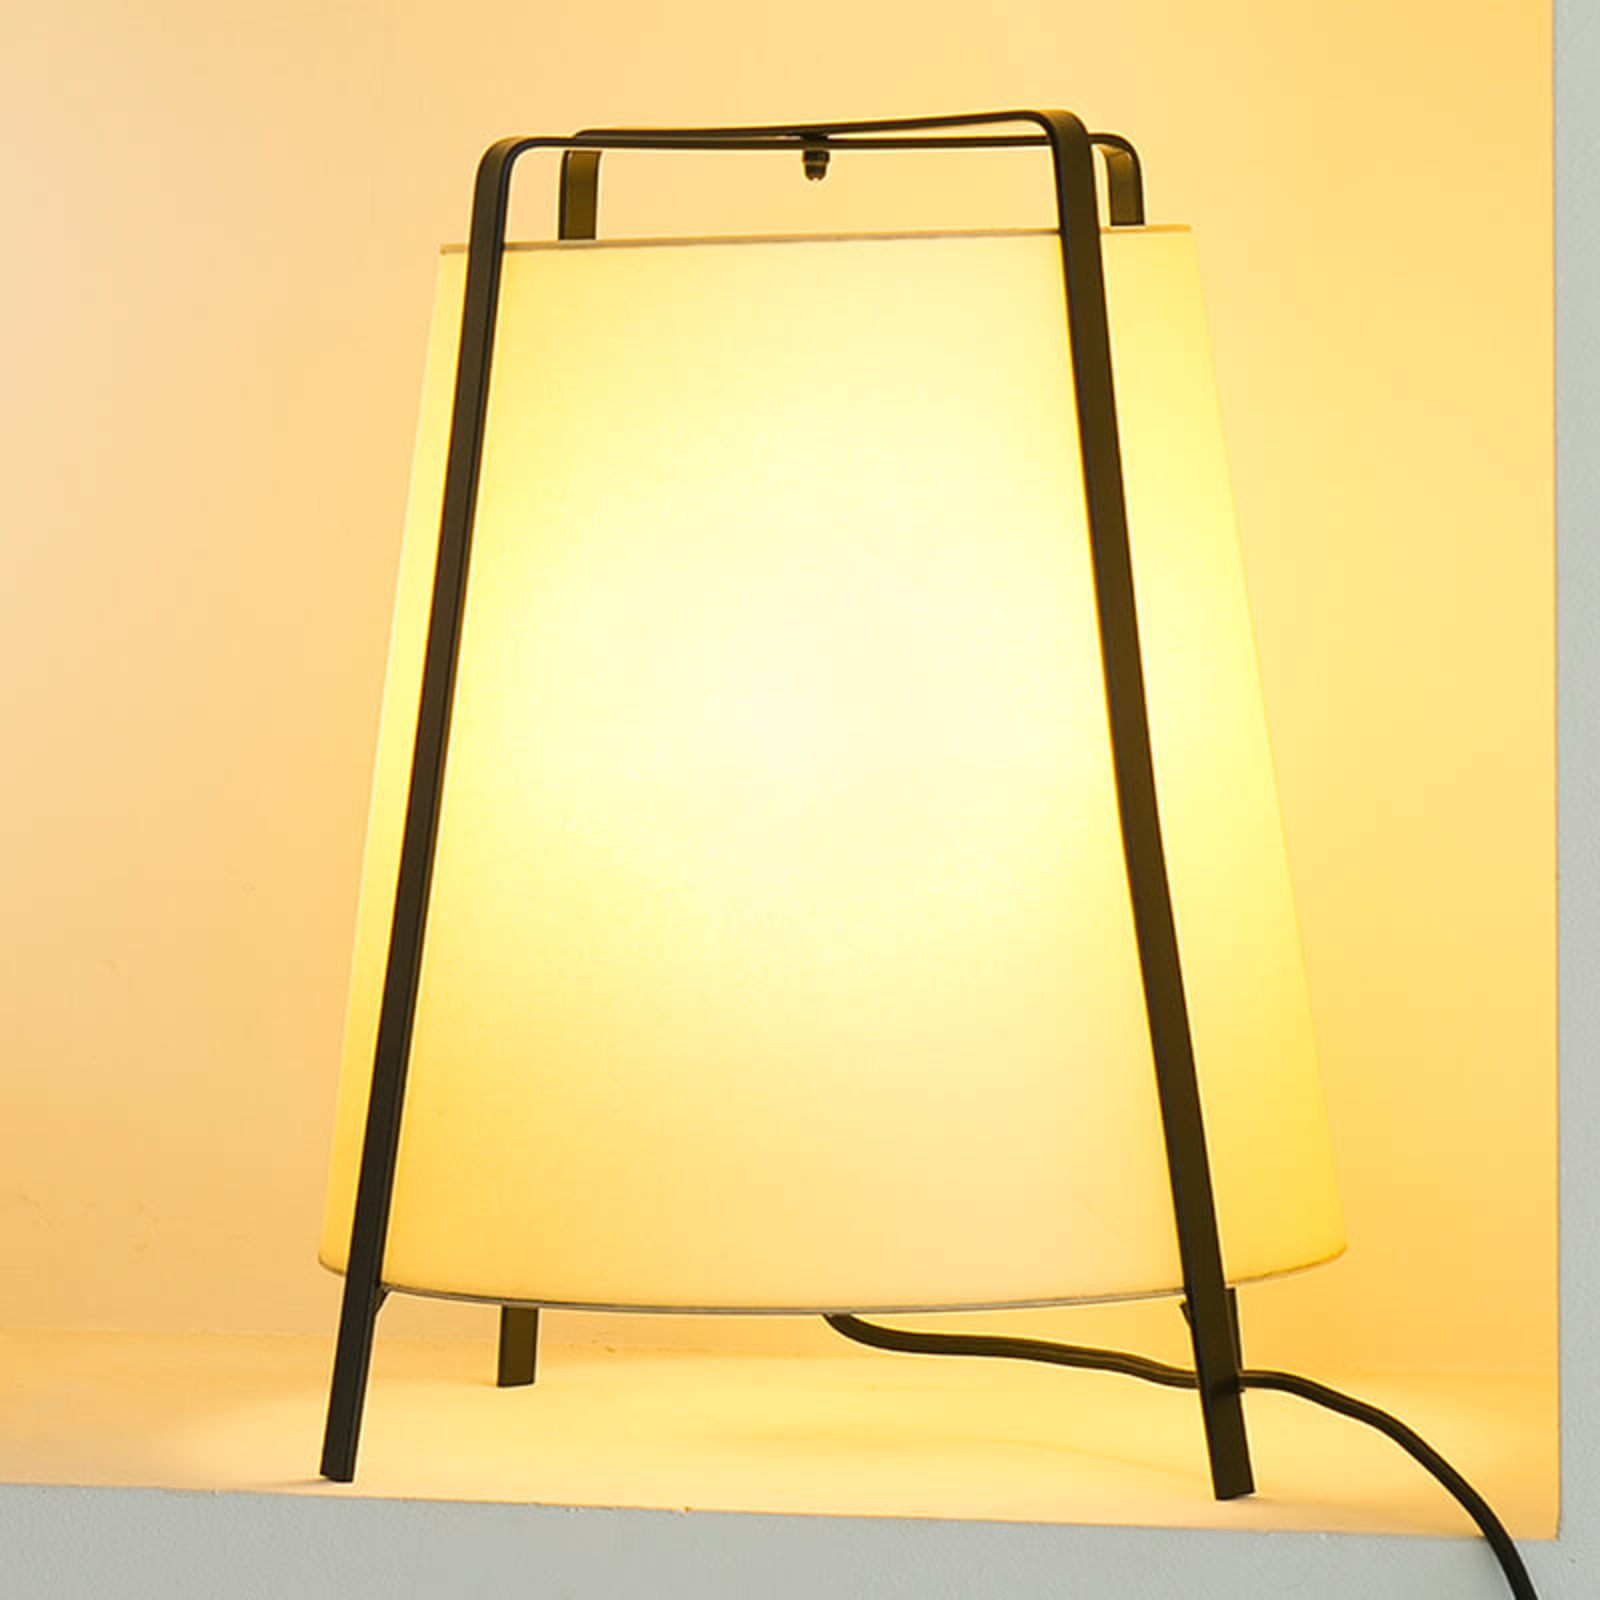 Made-in-Spain Akane table lamp